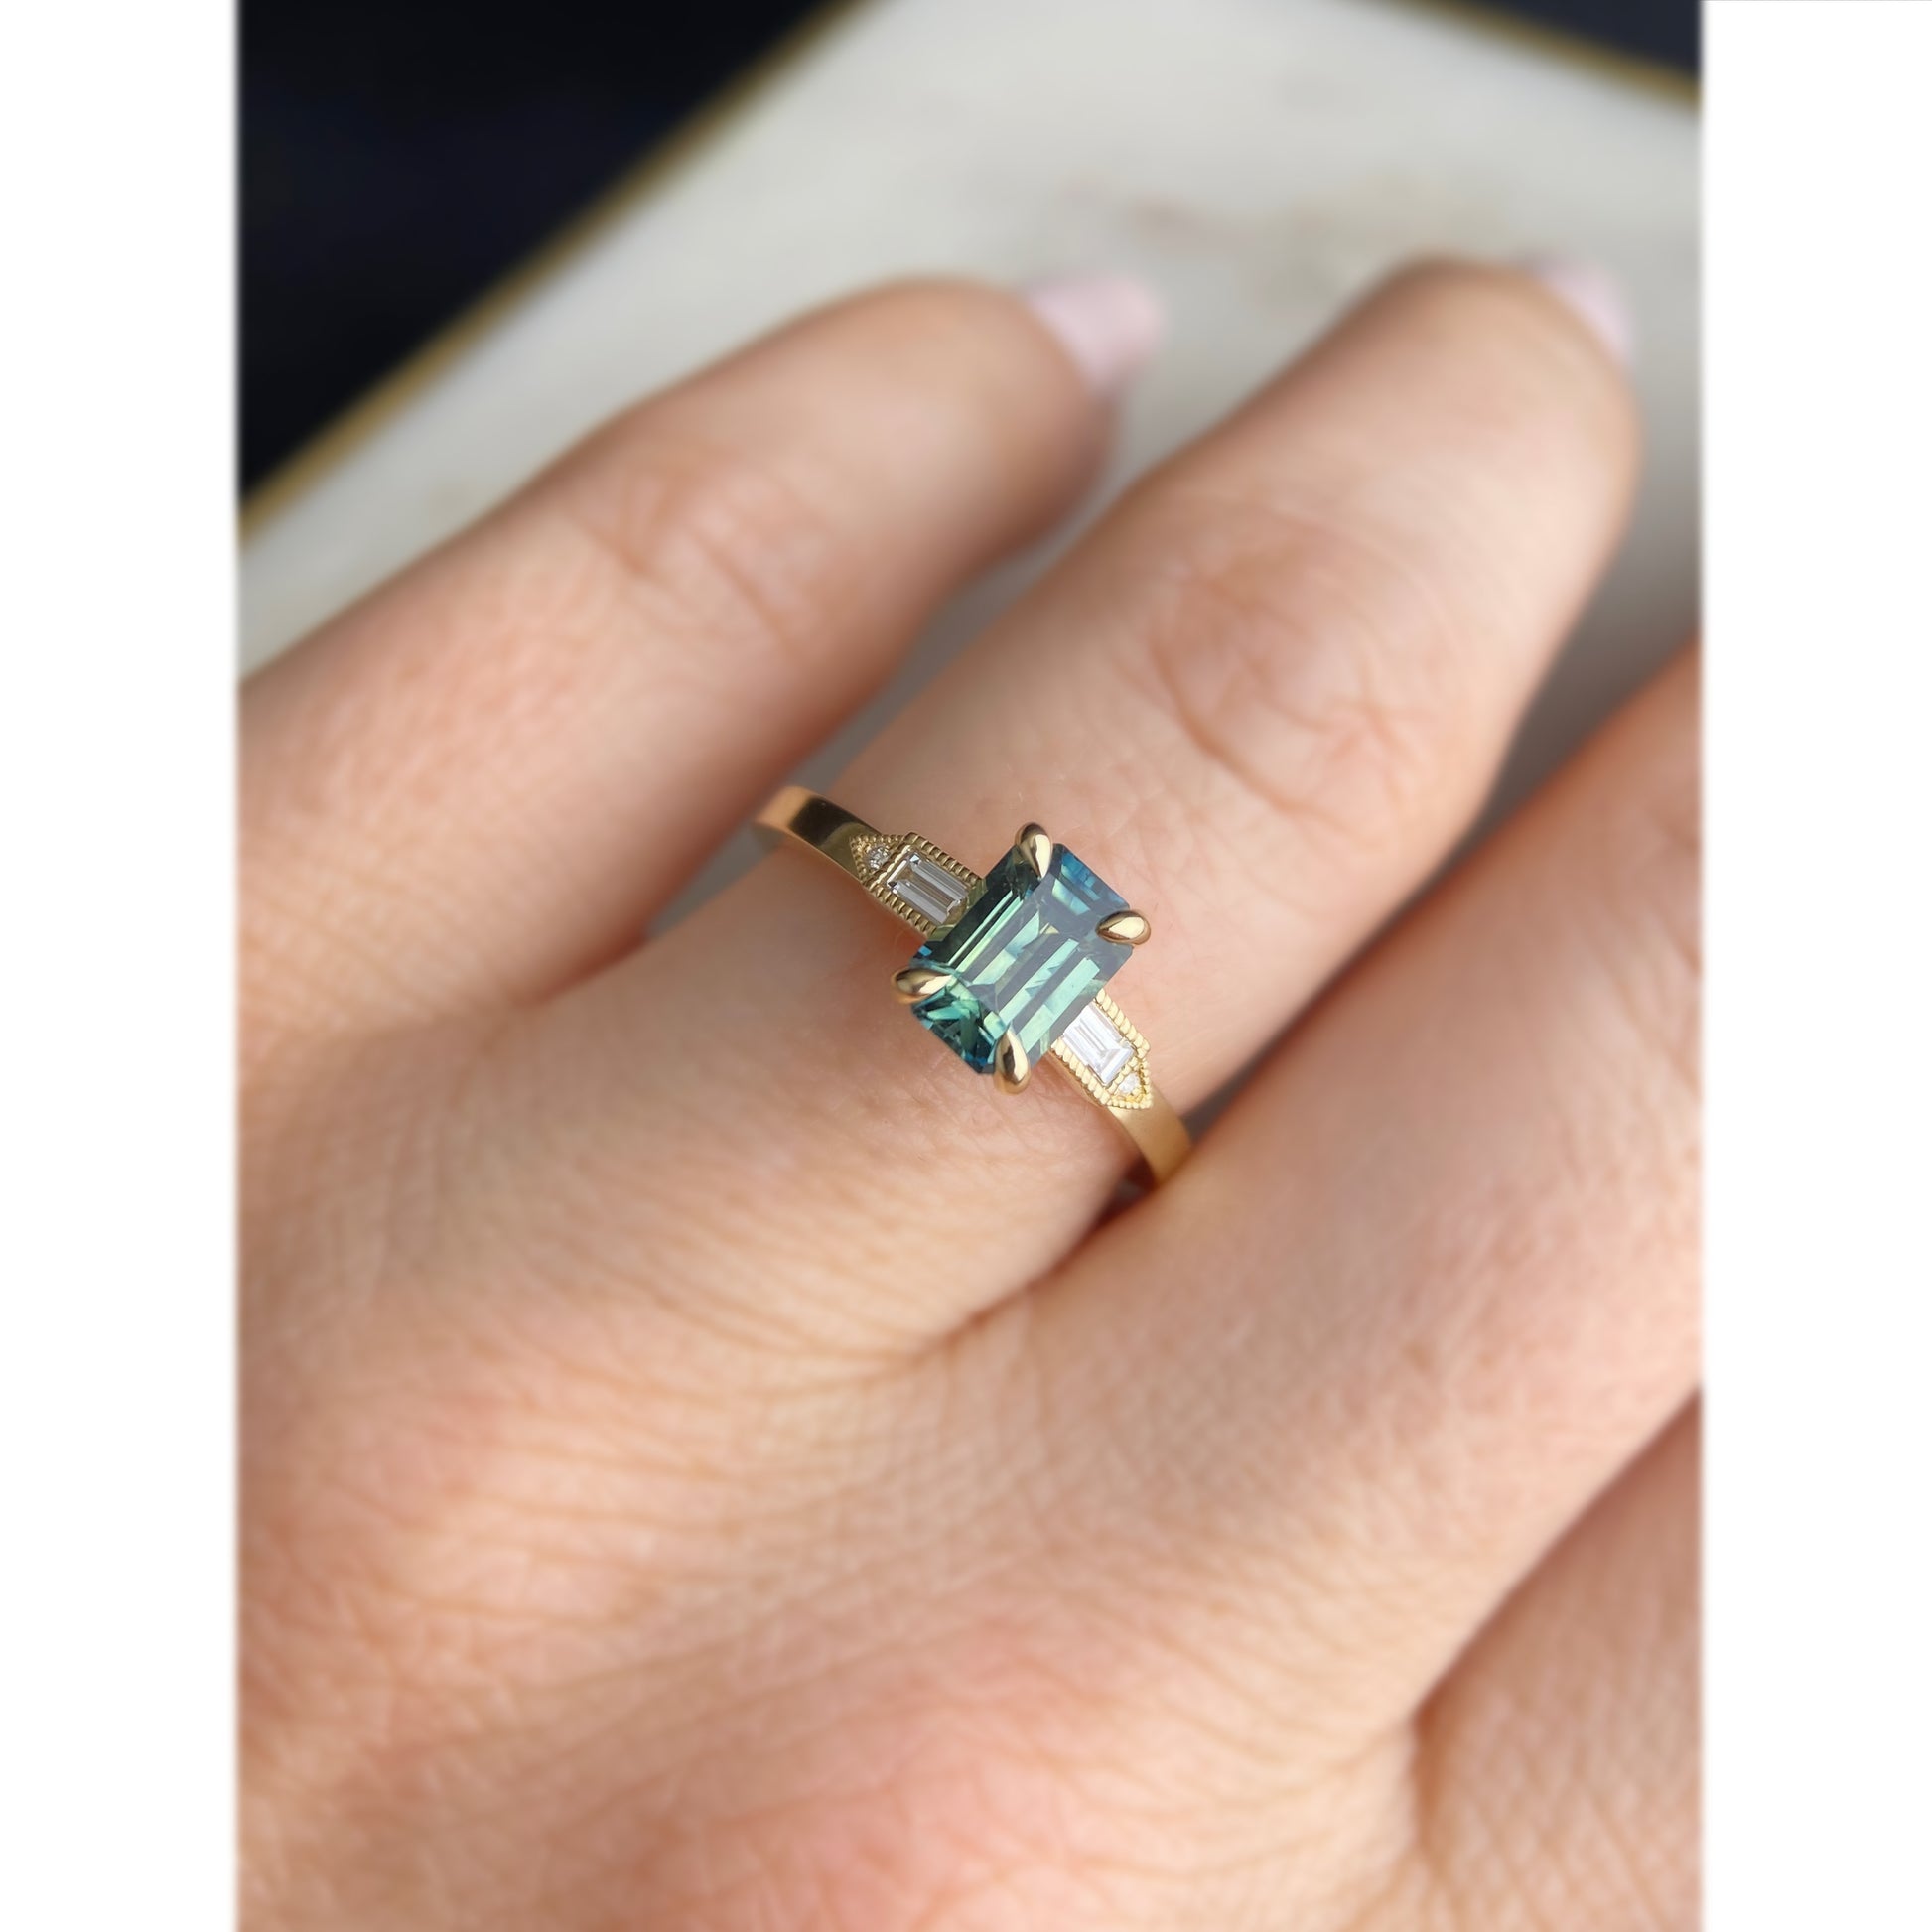 Emerald Cut Blue Green Mermaid Parti Sapphire Miligrain Accented Lab Diamond Baguette Engagement Ring 14K yellow gold